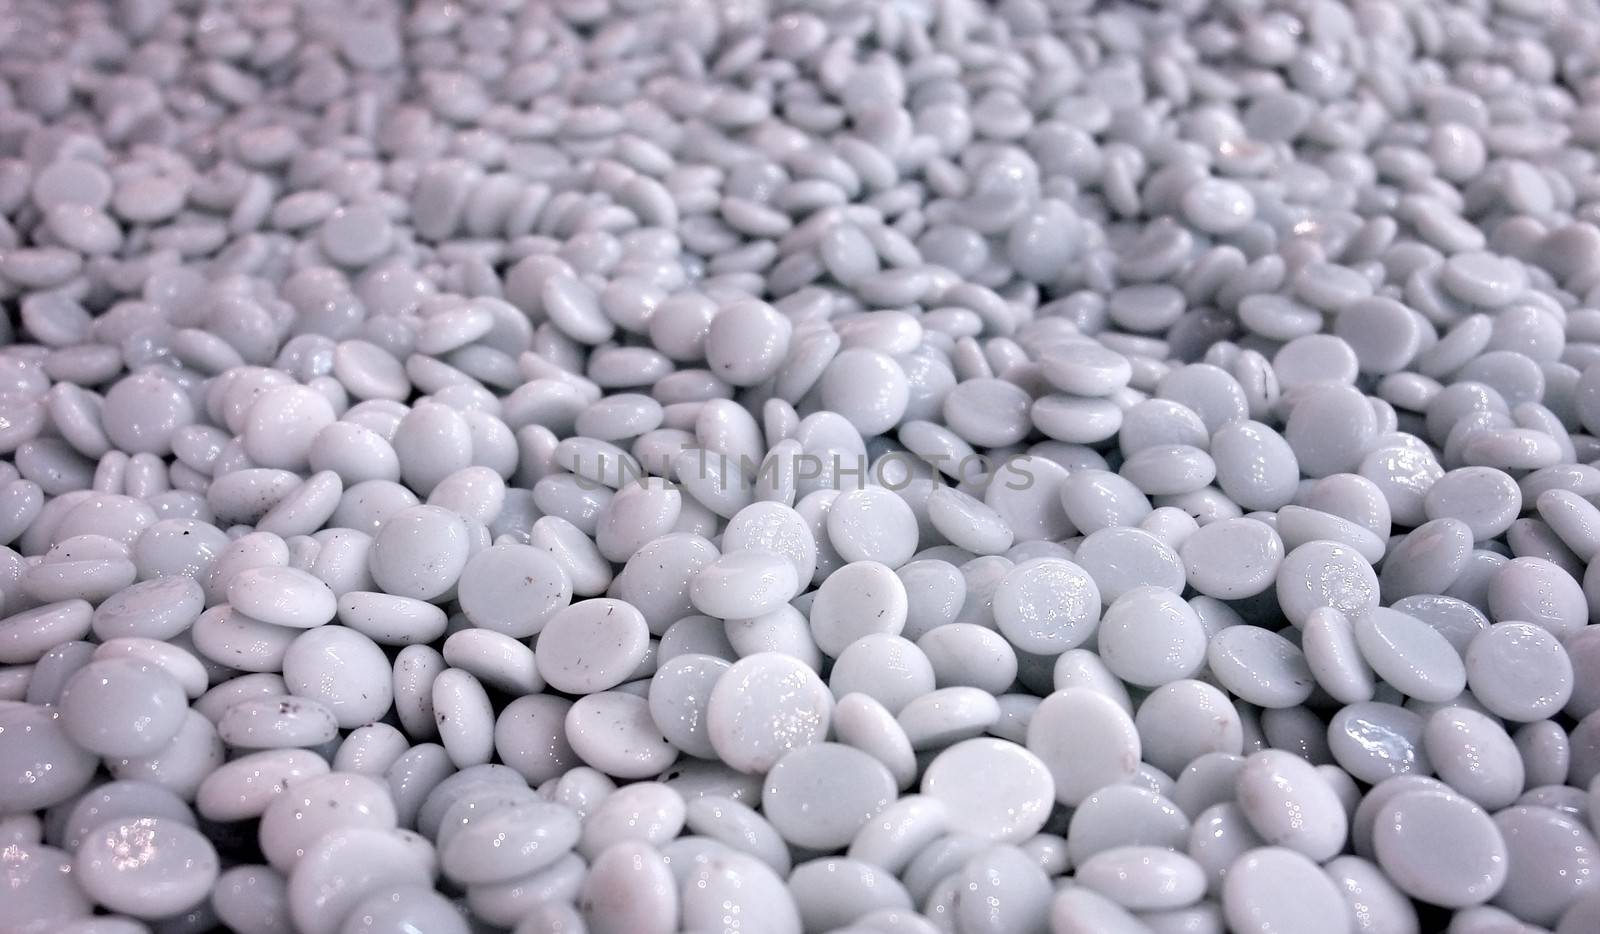 White pebbles by ptxgarfield